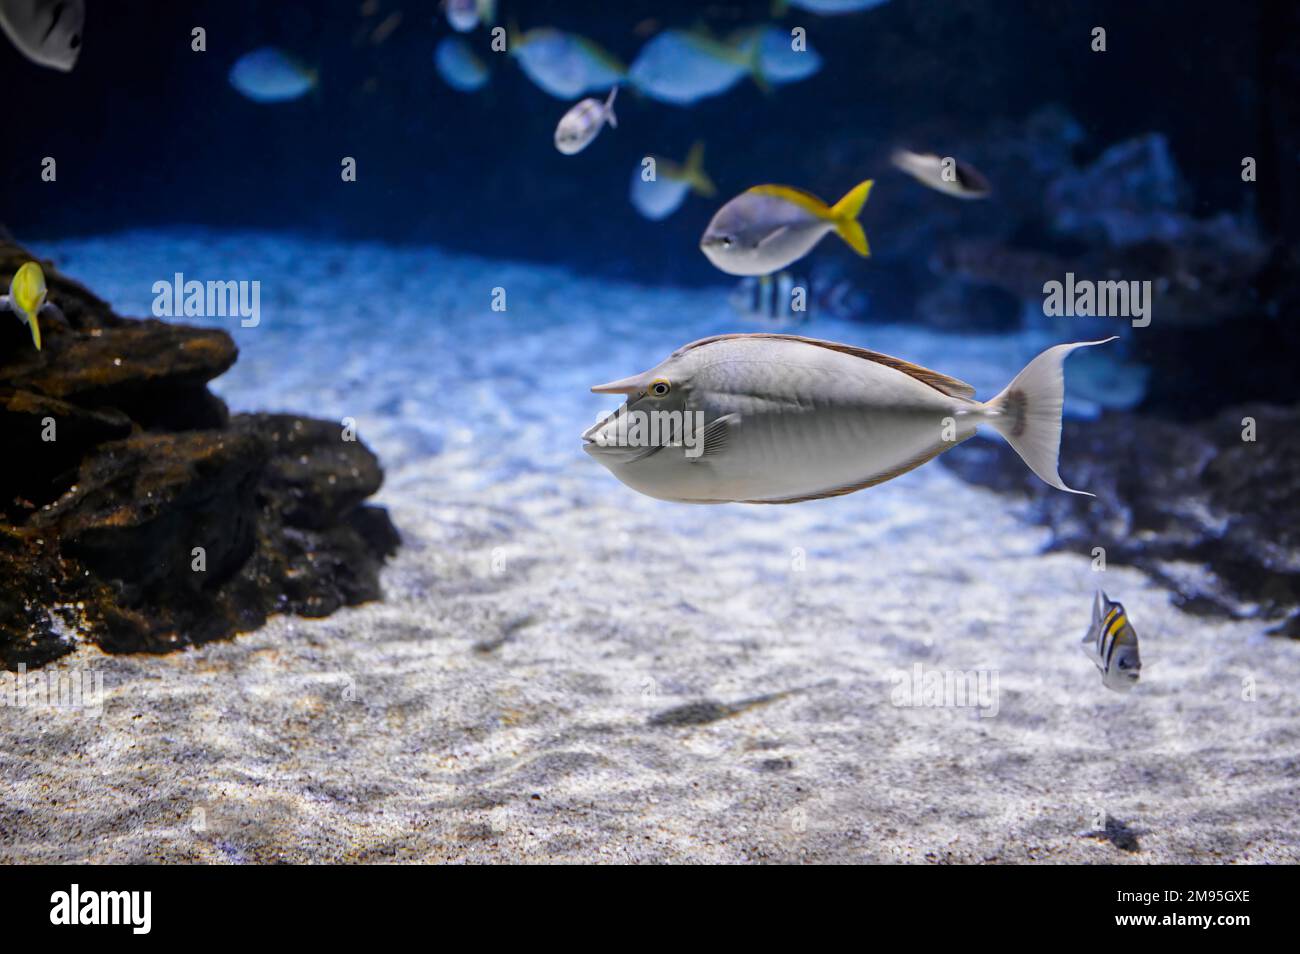 Humpback unicorn fish (naso brachycentron) swimming in an aquarium among other fish and rocks Stock Photo